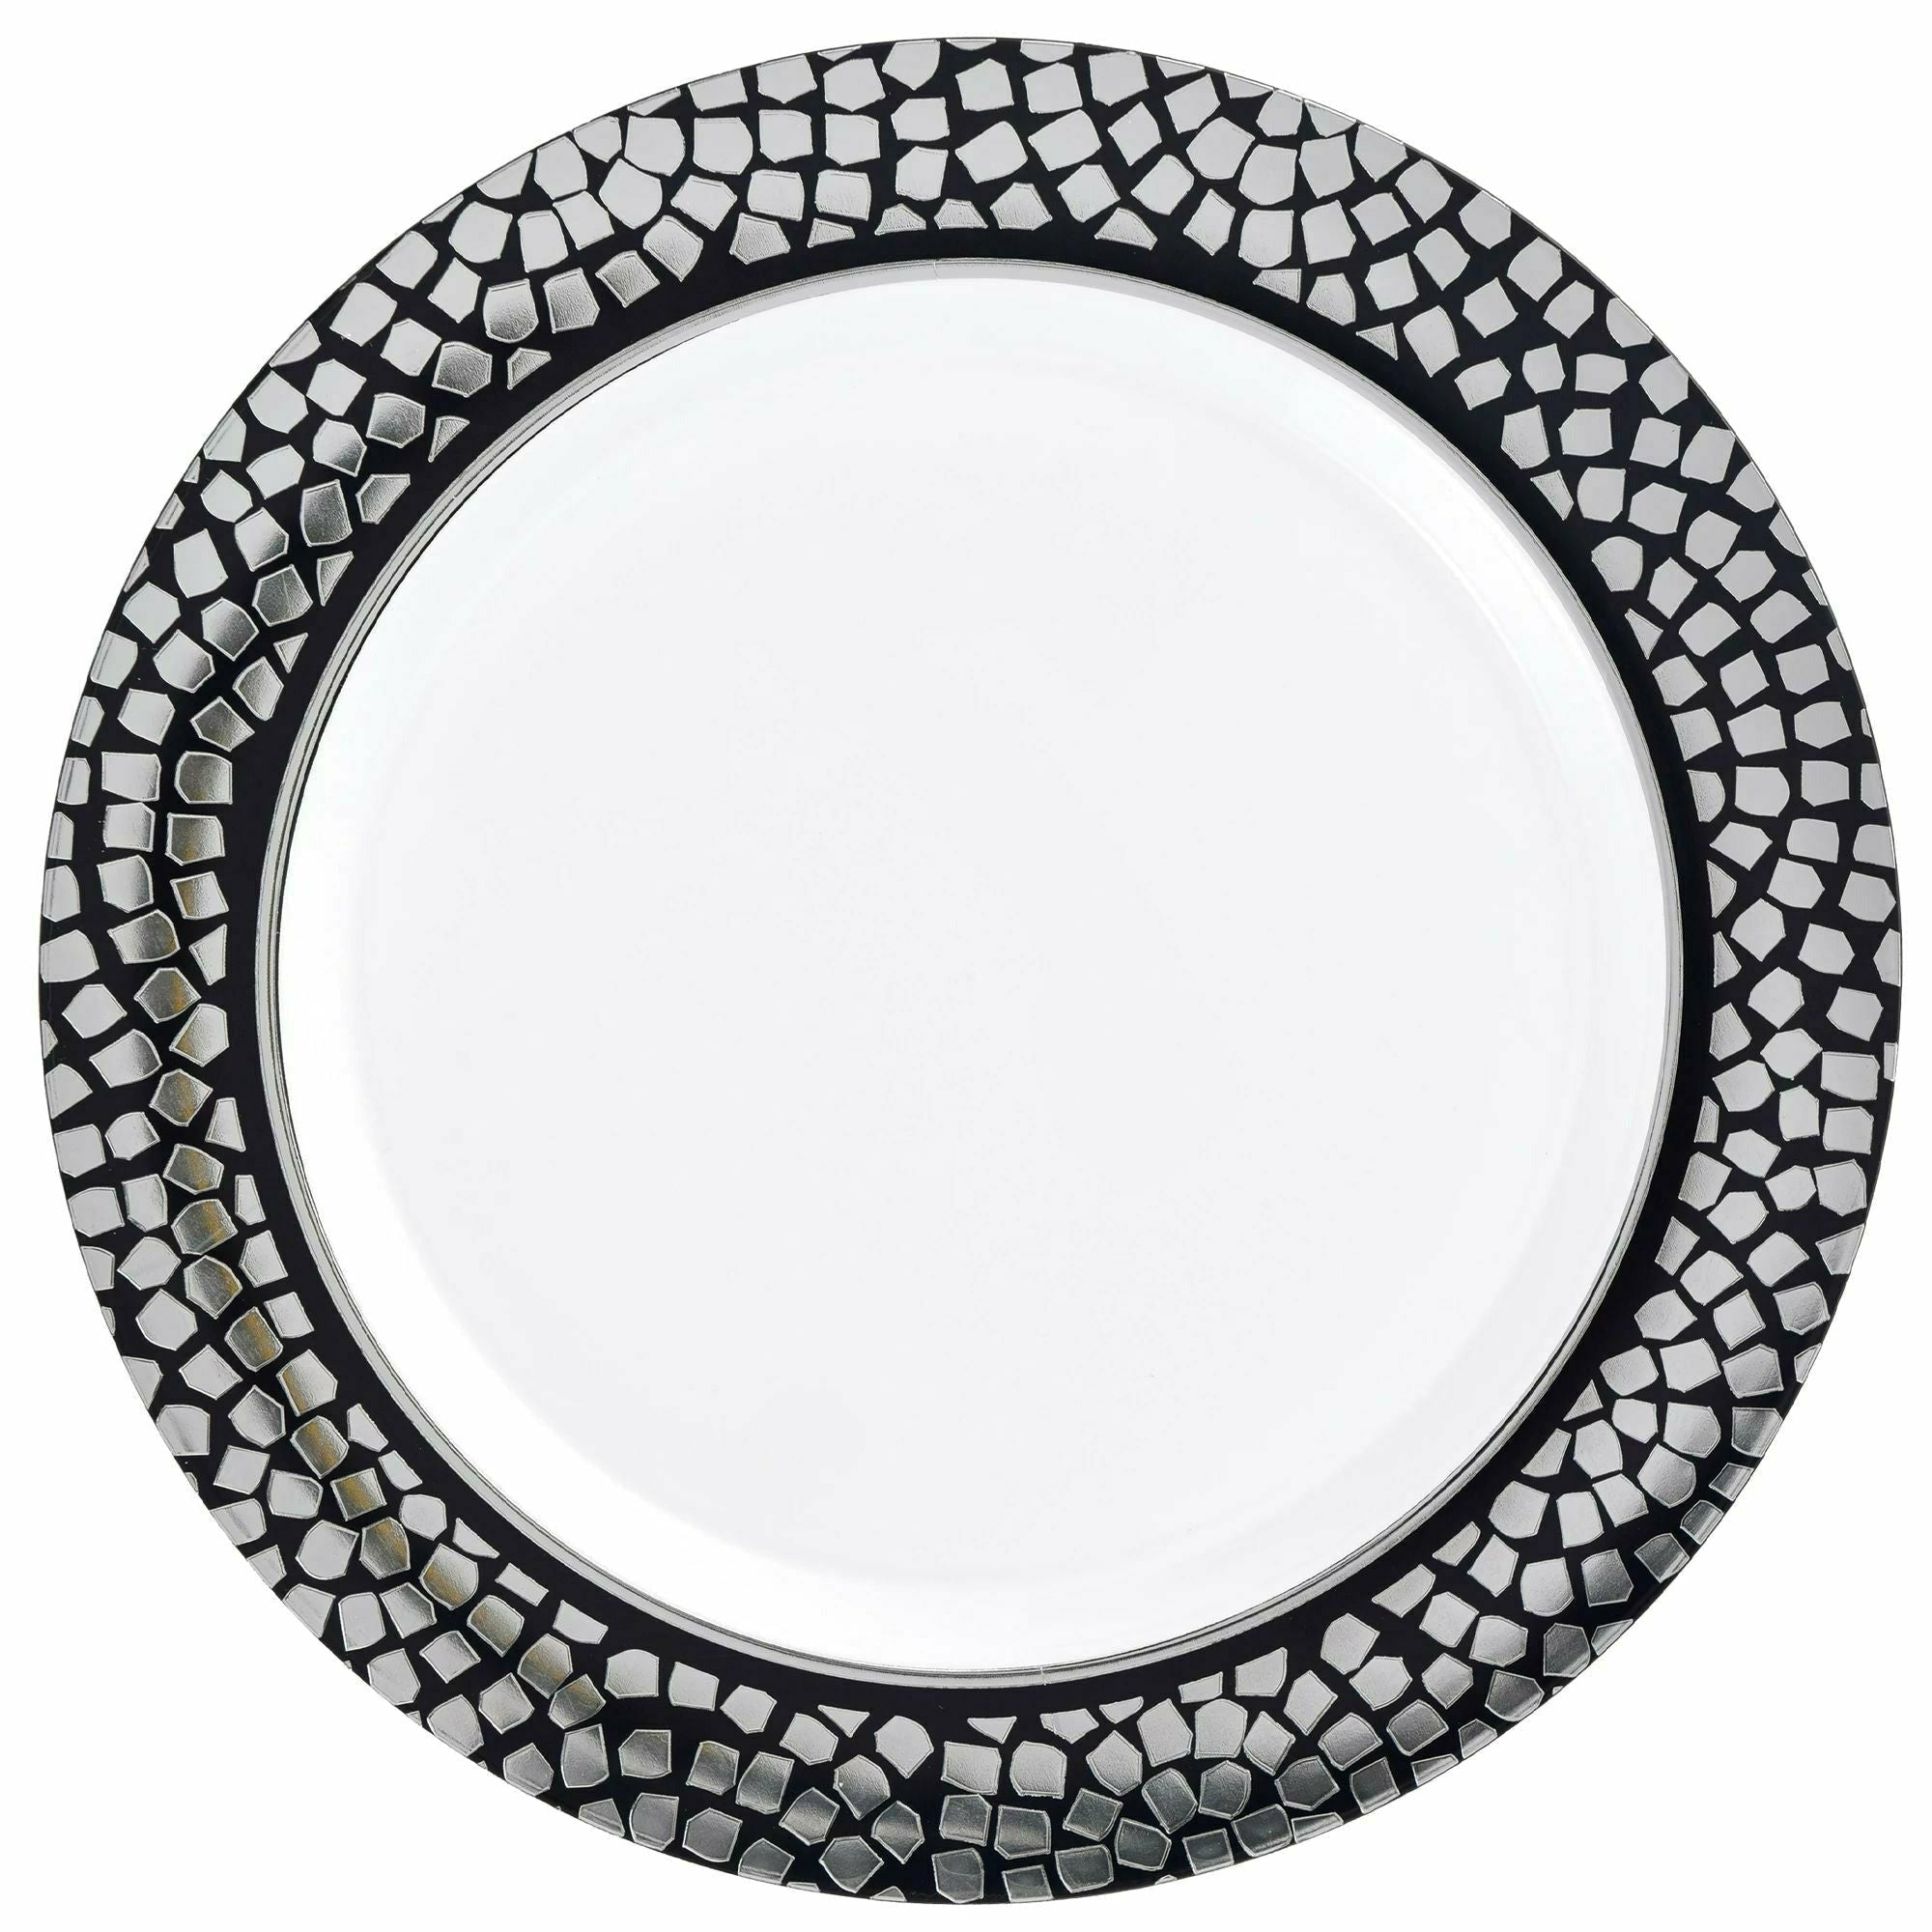 Amscan BASIC Premium 7 1/2" Plastic Border Plate Mosaic - Silver/Black